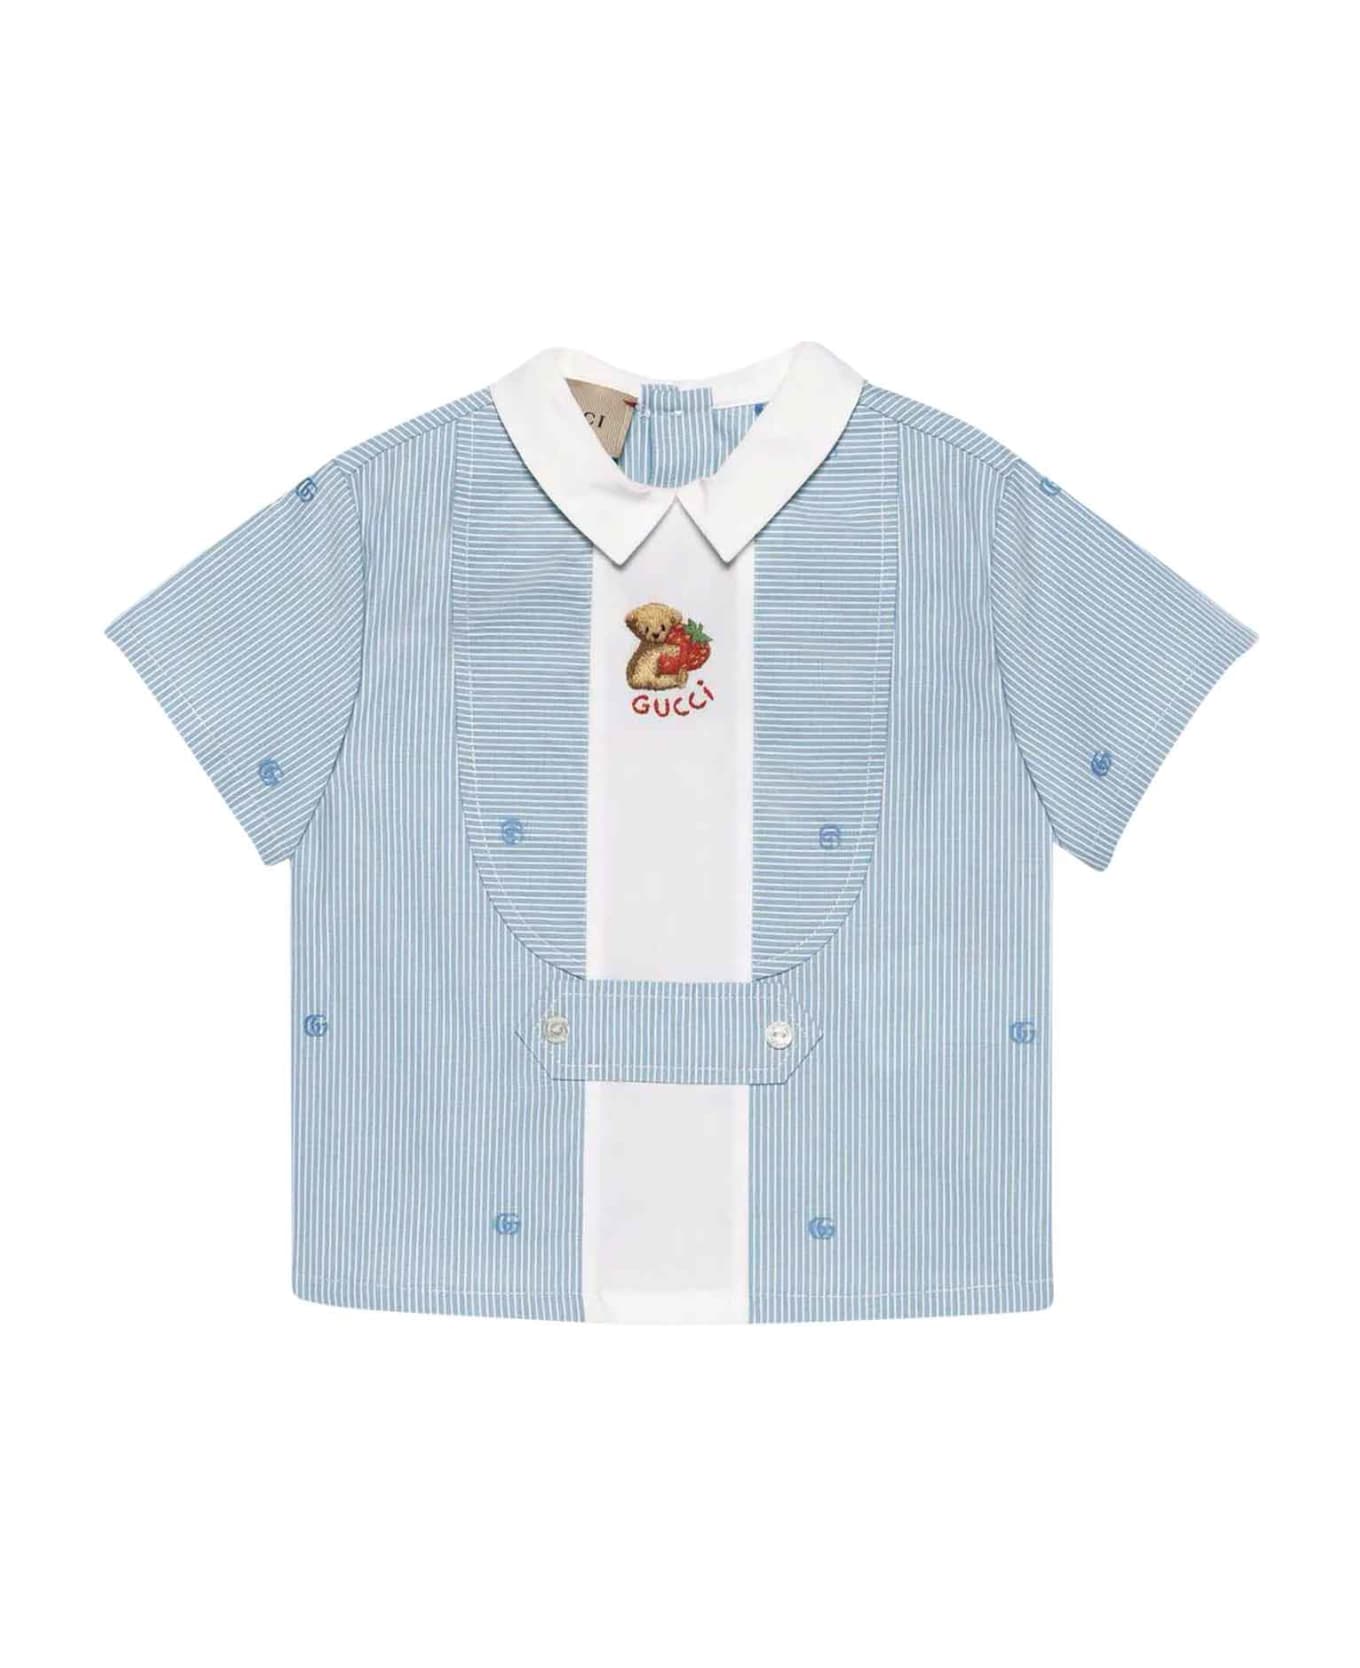 Gucci Blue Striped Shirt Baby Boy - Azzurro/bianco